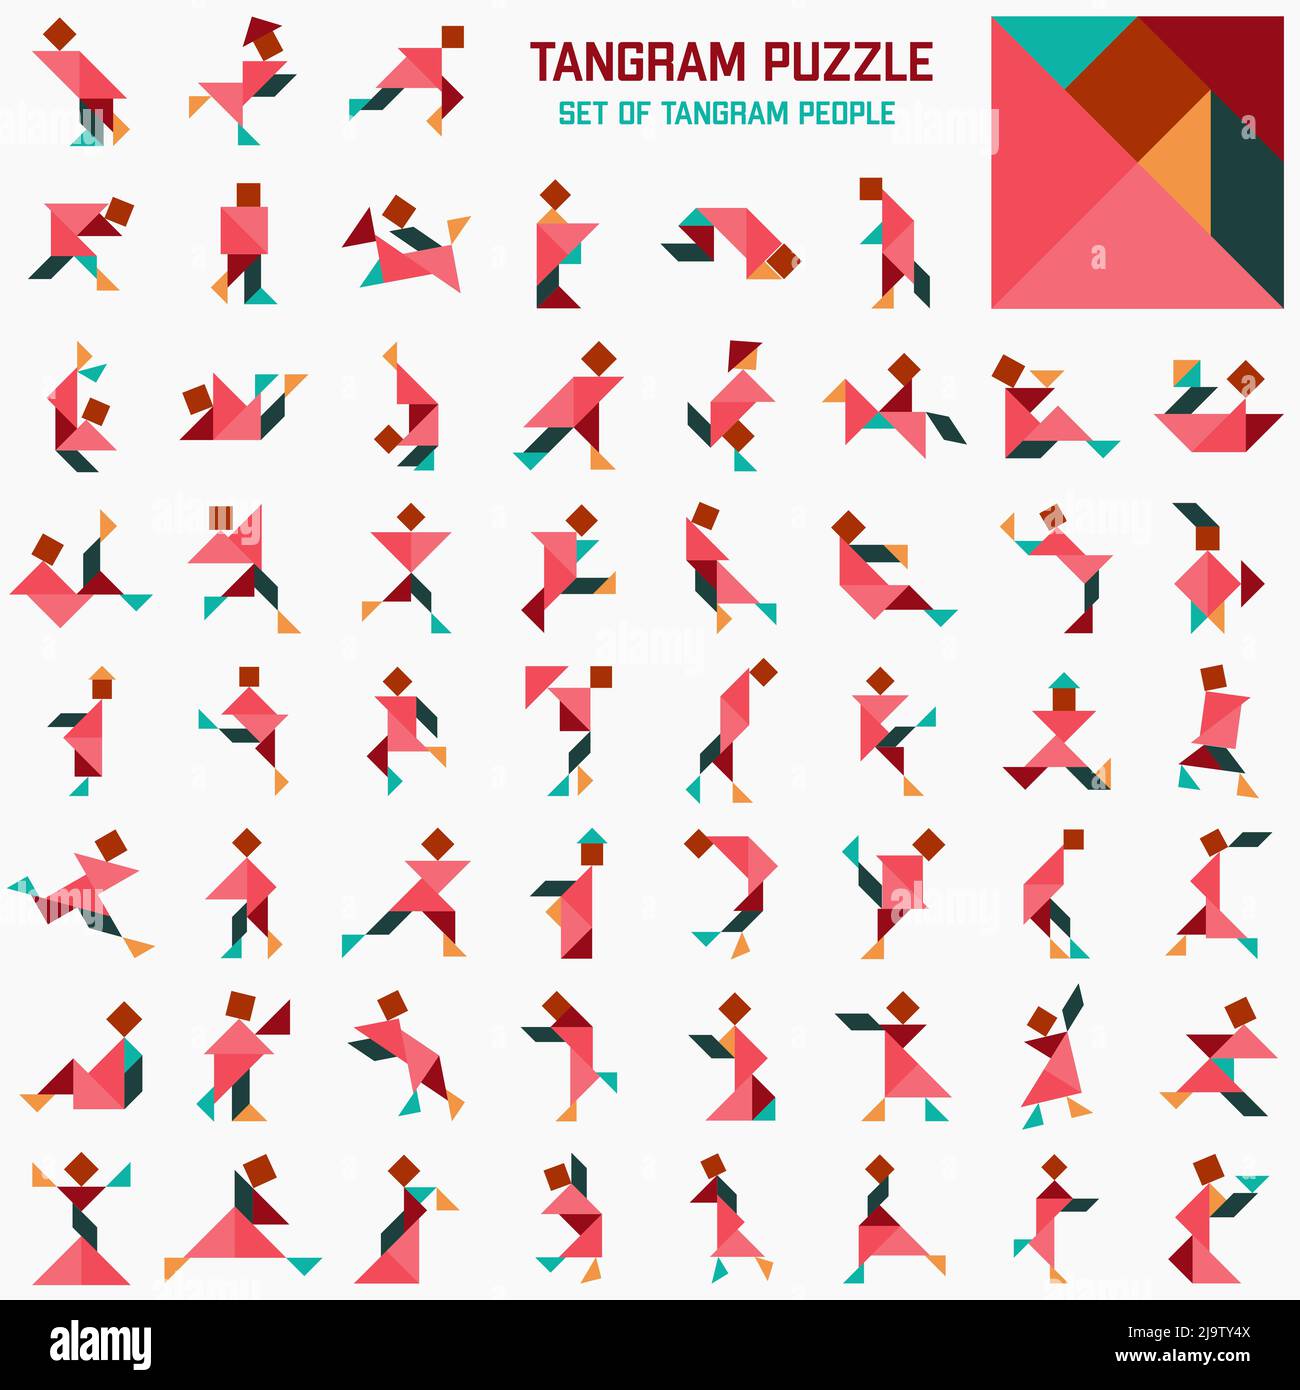 Tangram puzzle. Set of tangram people. Stock Vector